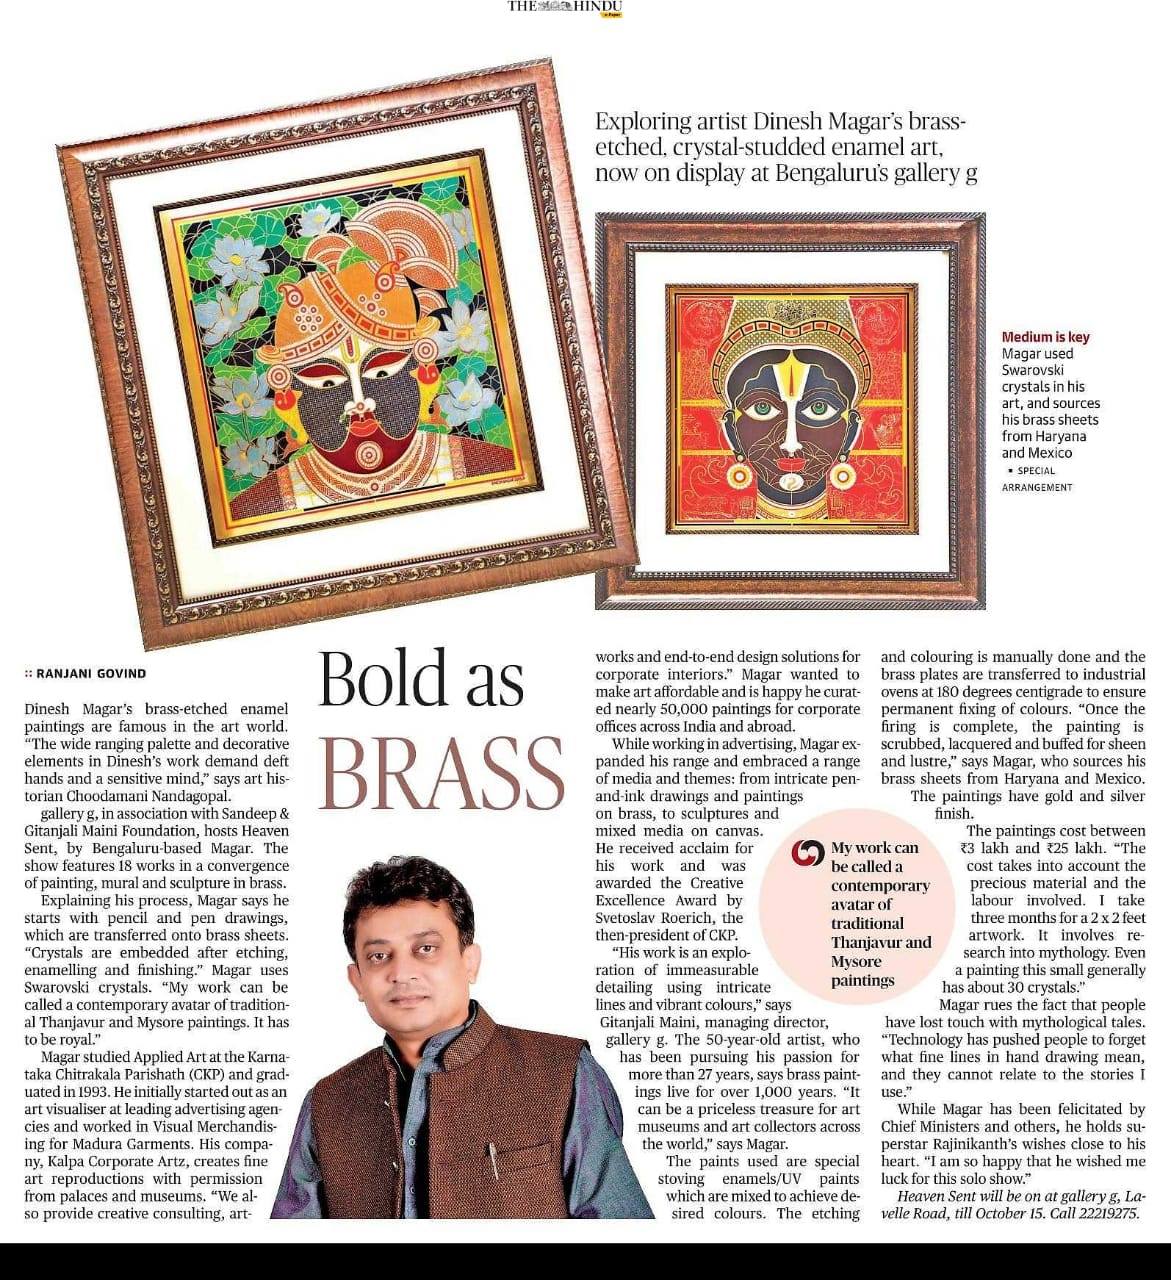 Artist Dinesh Magar’s brass-etched works on display